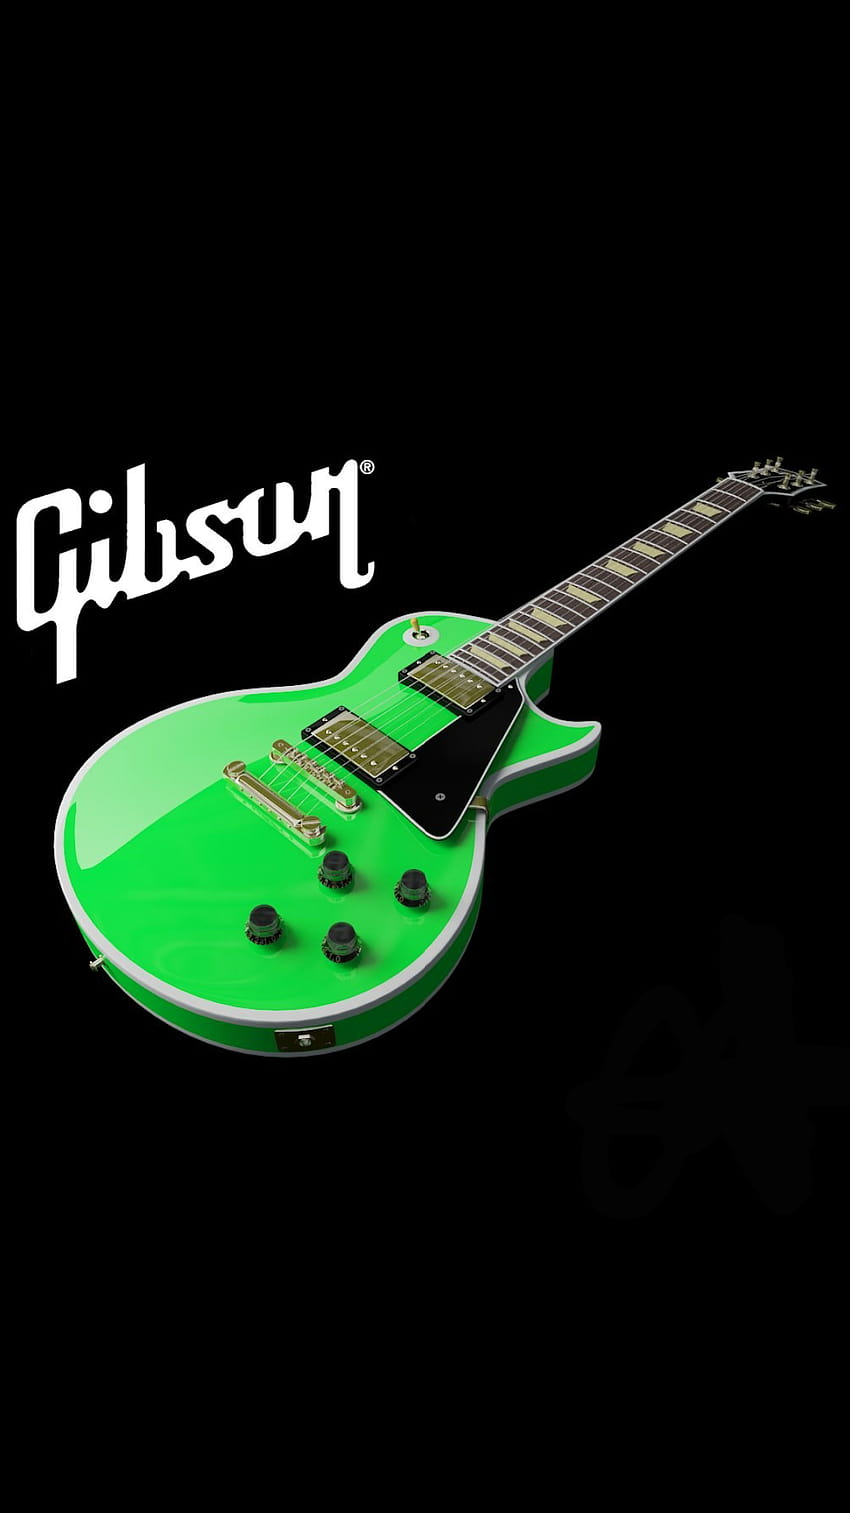 Gibson Les Paul [1130x2012], guitar amoled HD phone wallpaper